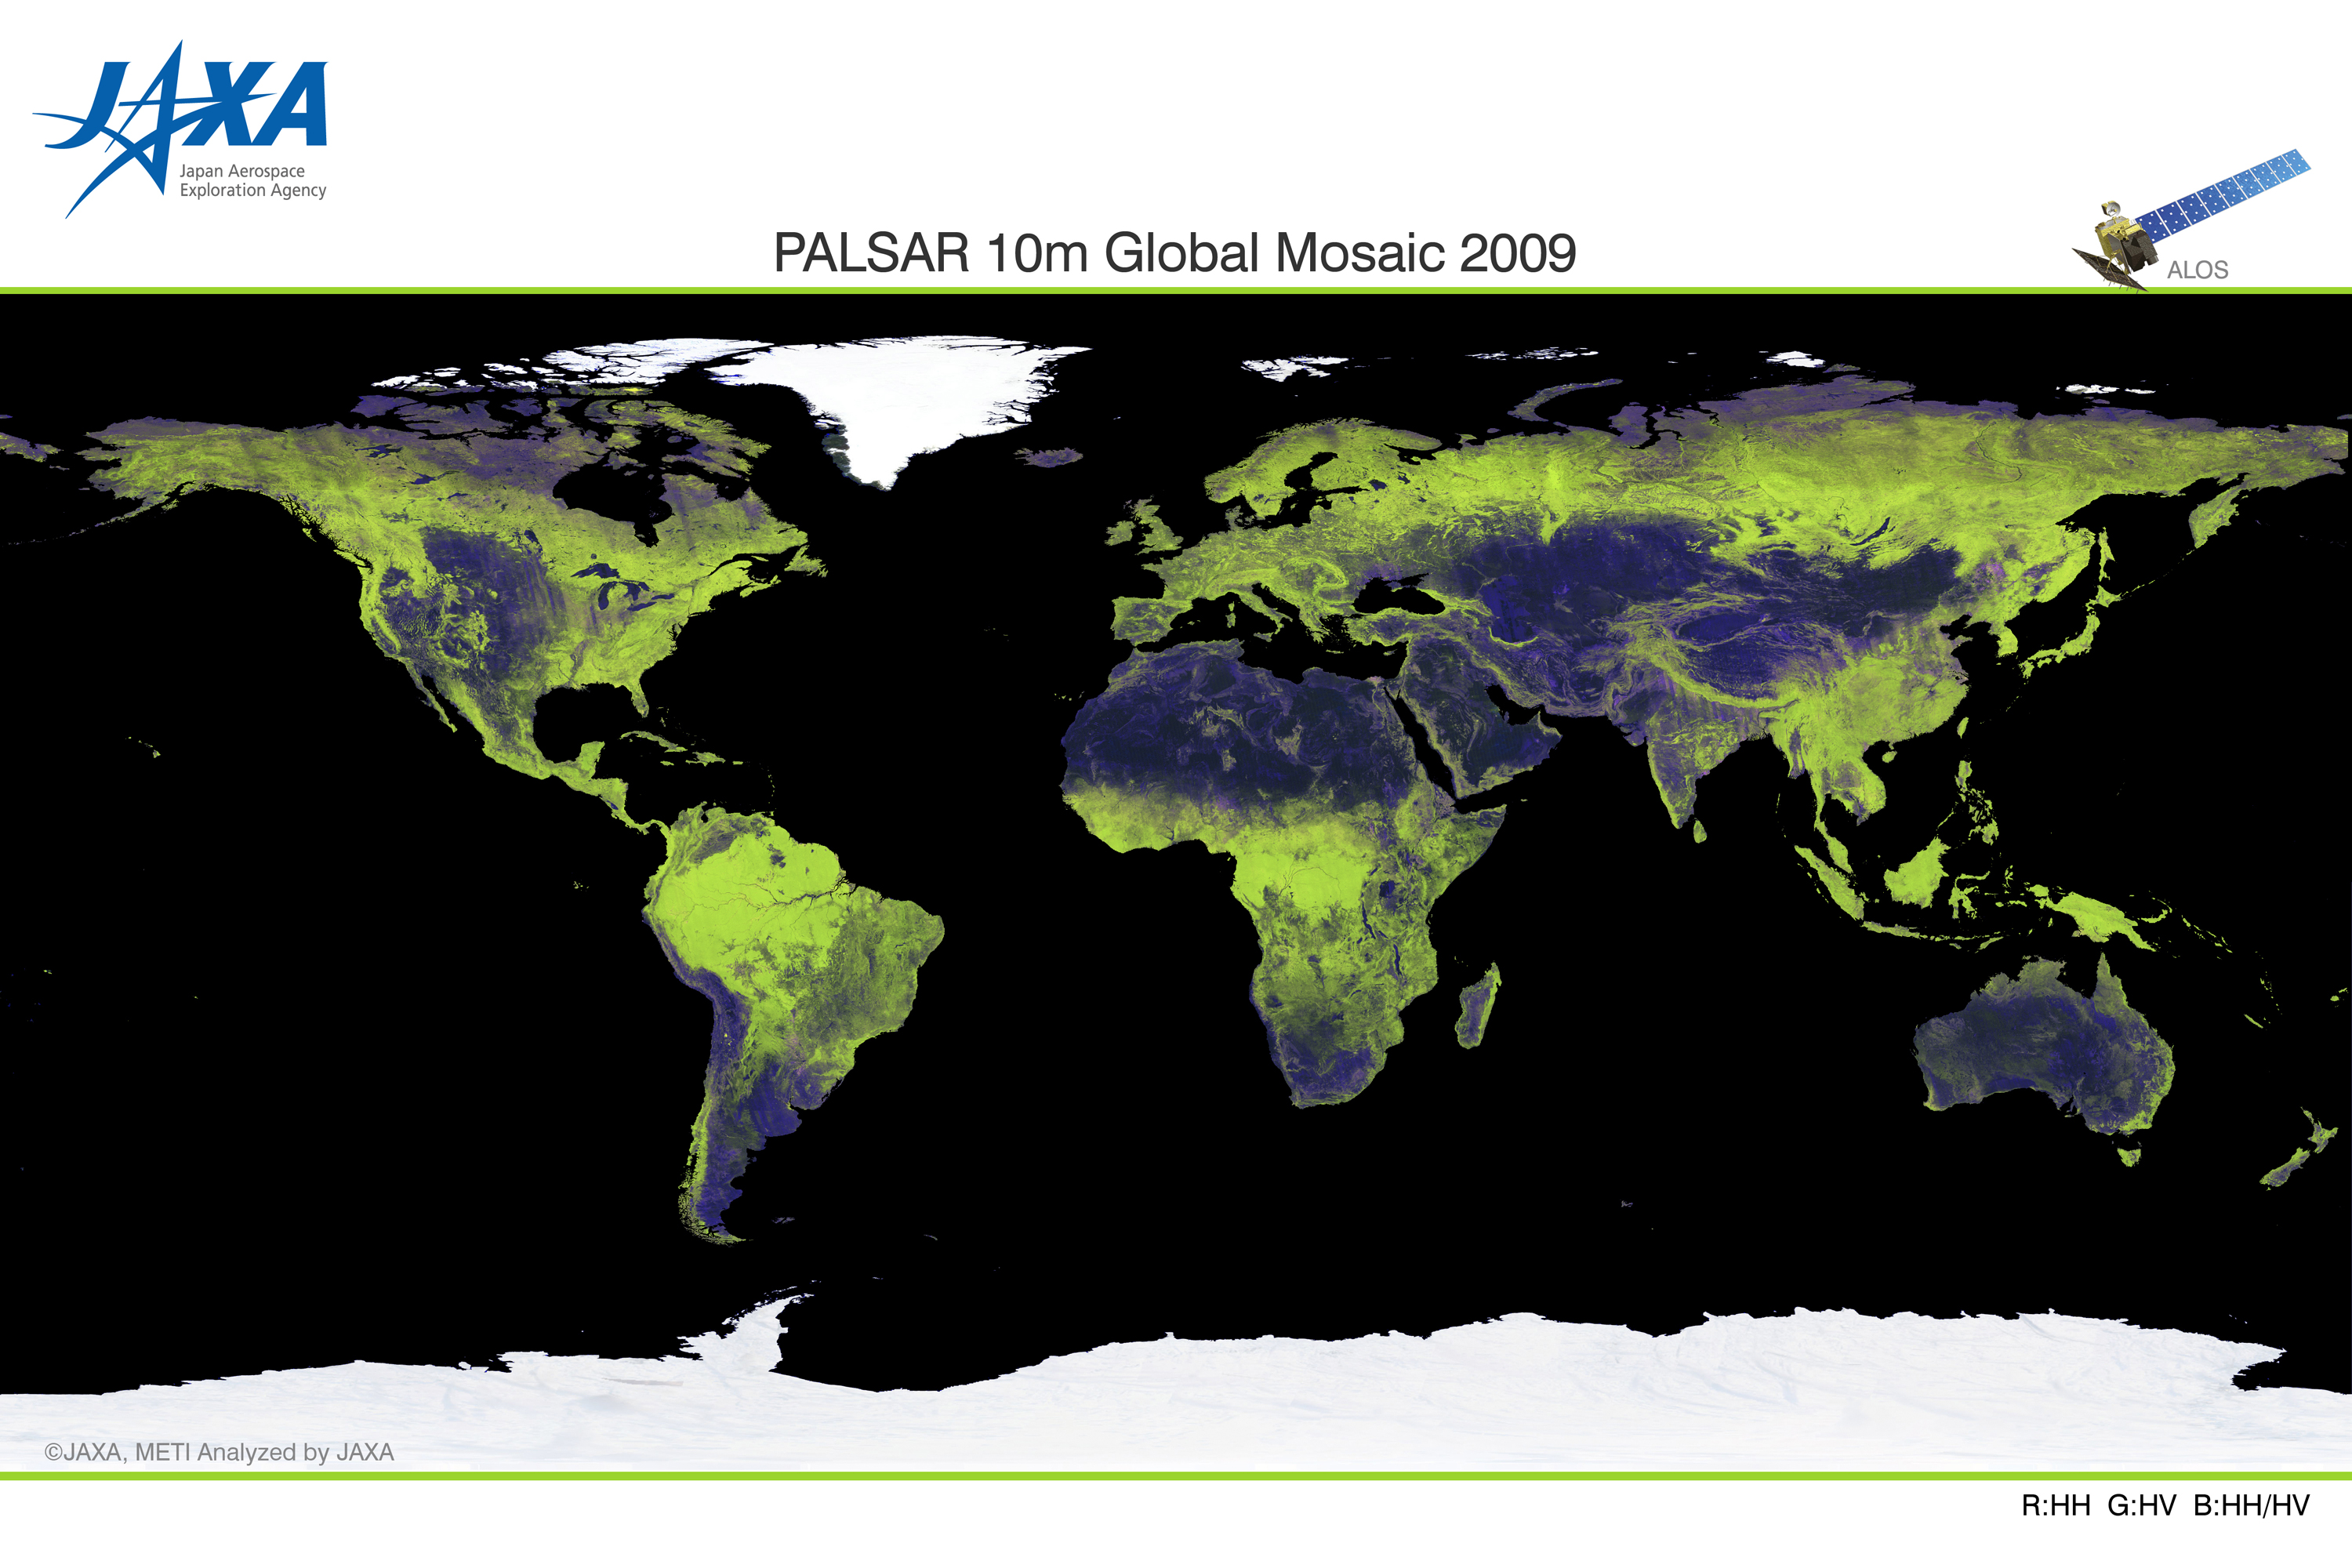 Figure 1: PALSAR 10m Global Mosaic 2009 (PALSAR, FBD)